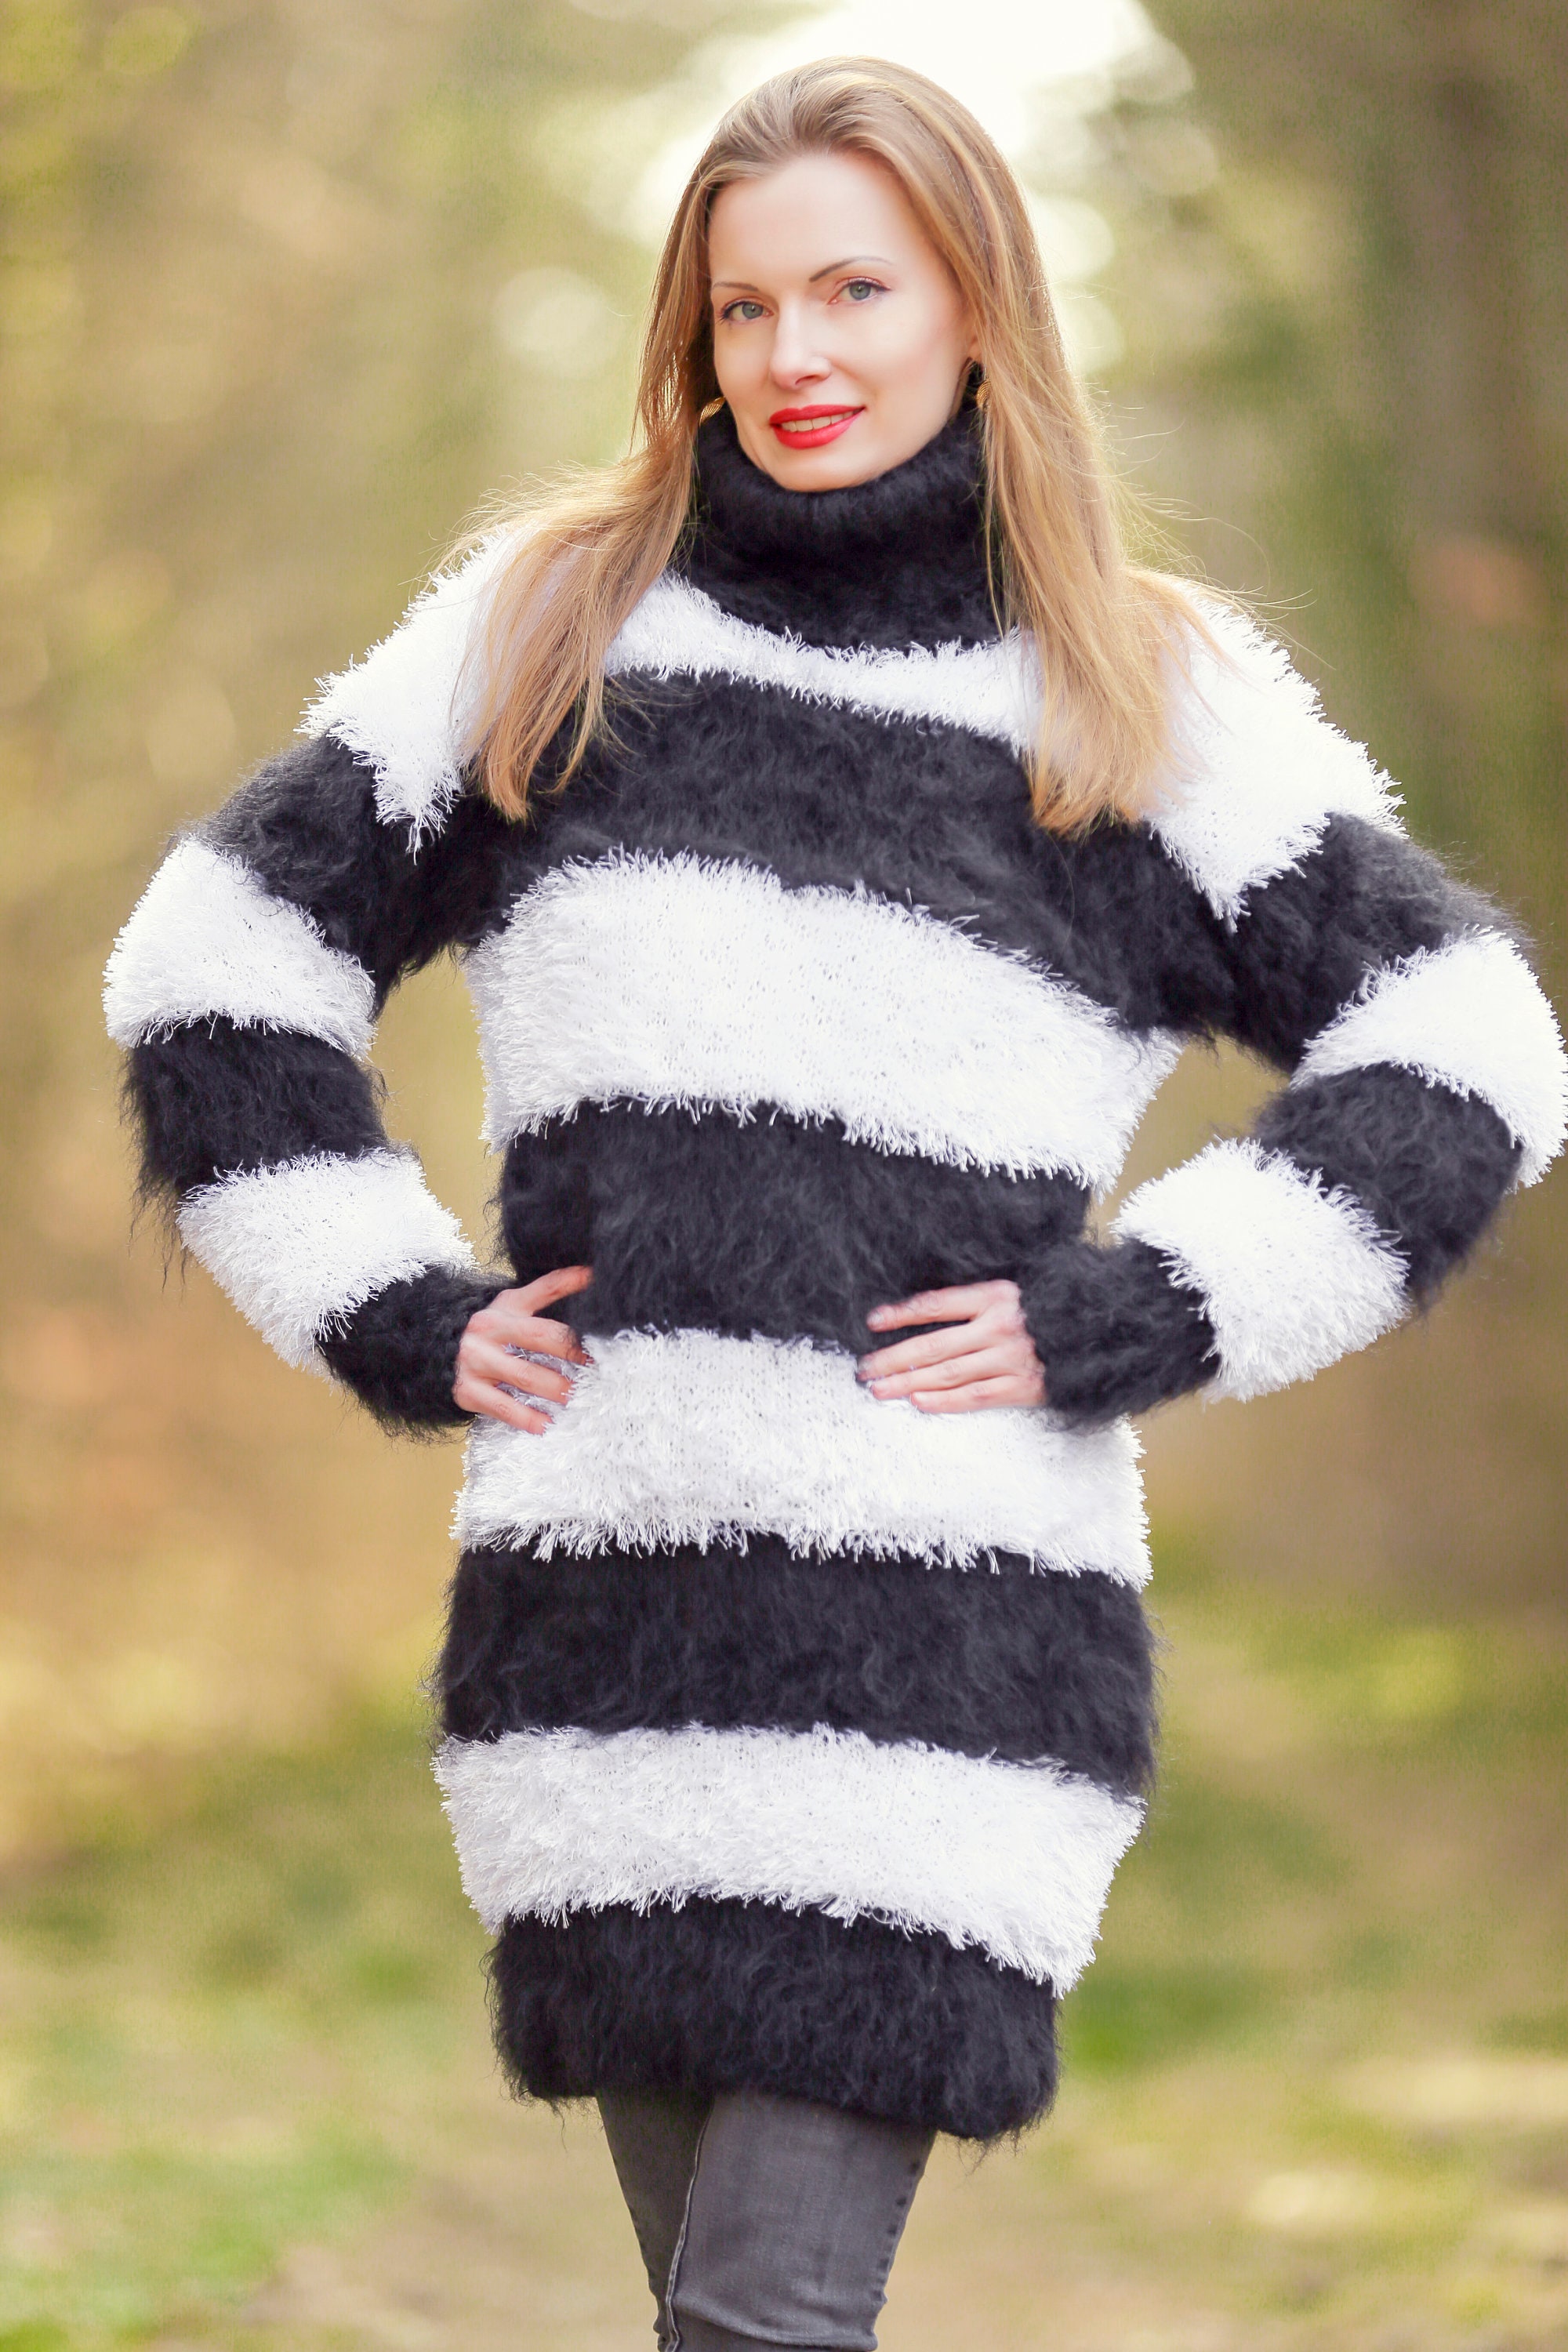 Fuzzy Mohair Decofur Sweater Black White Stripes Jumper by | Etsy